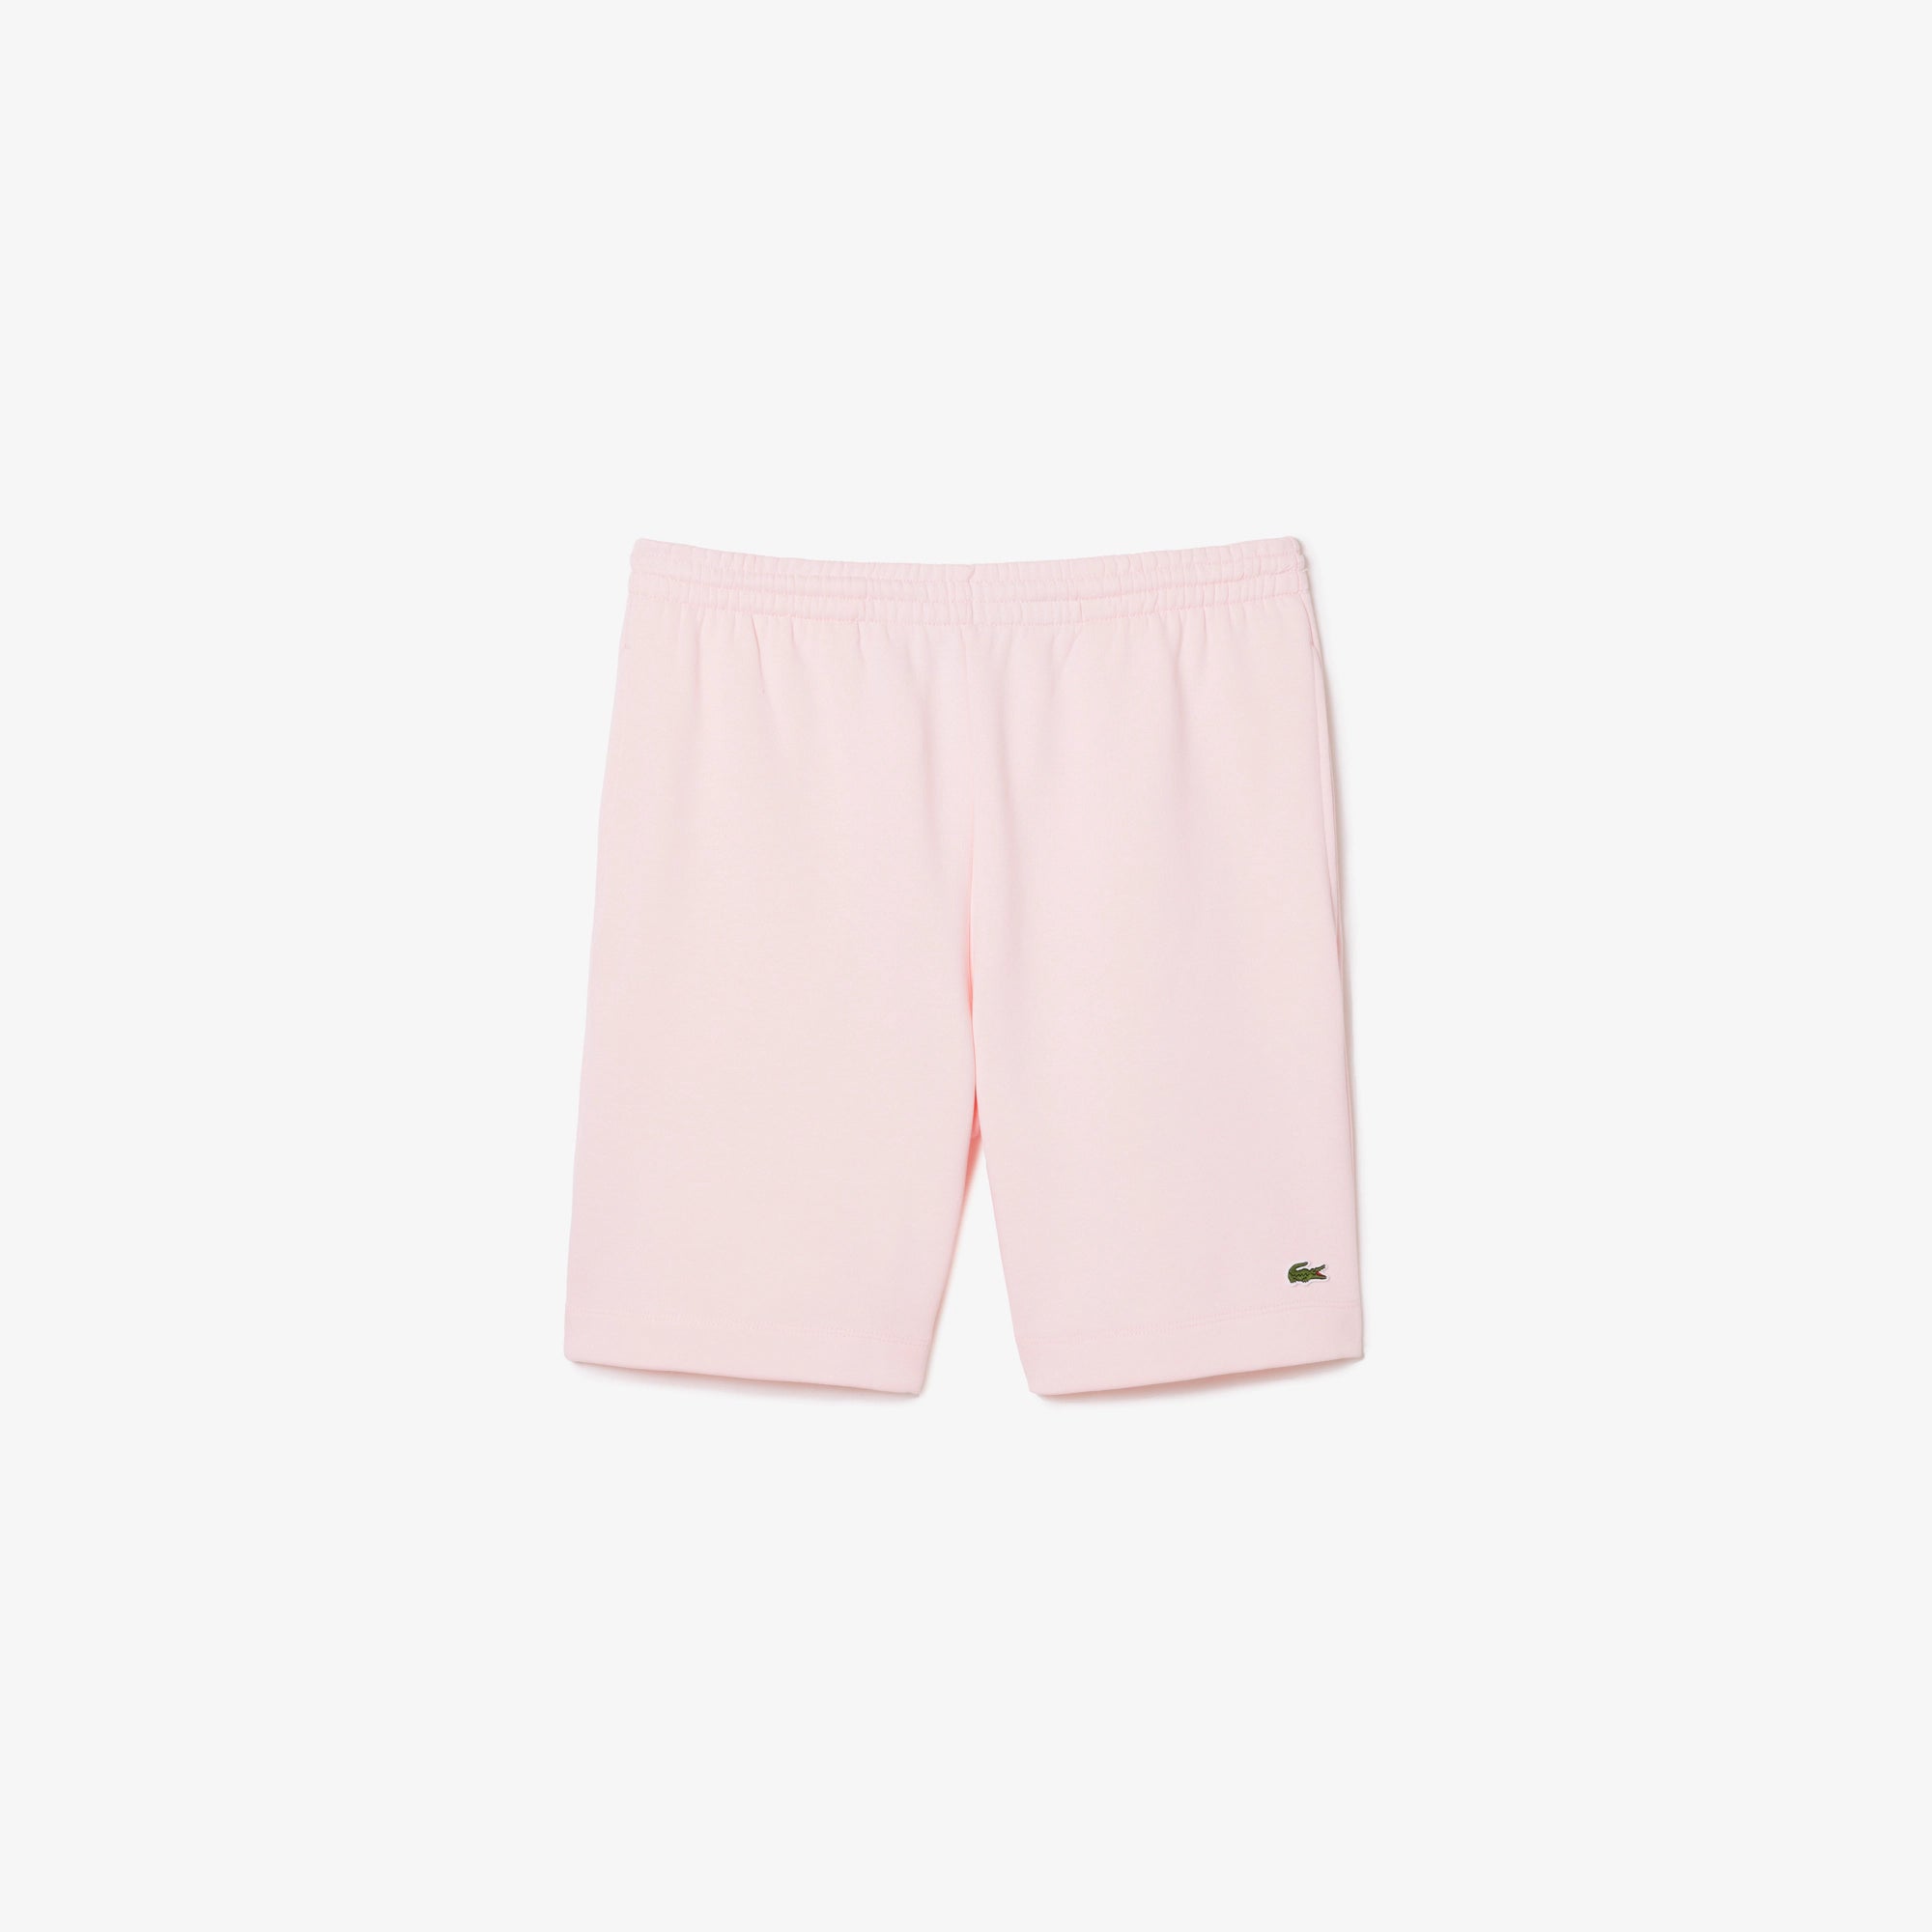 Men's shorts - T03 Flamingo